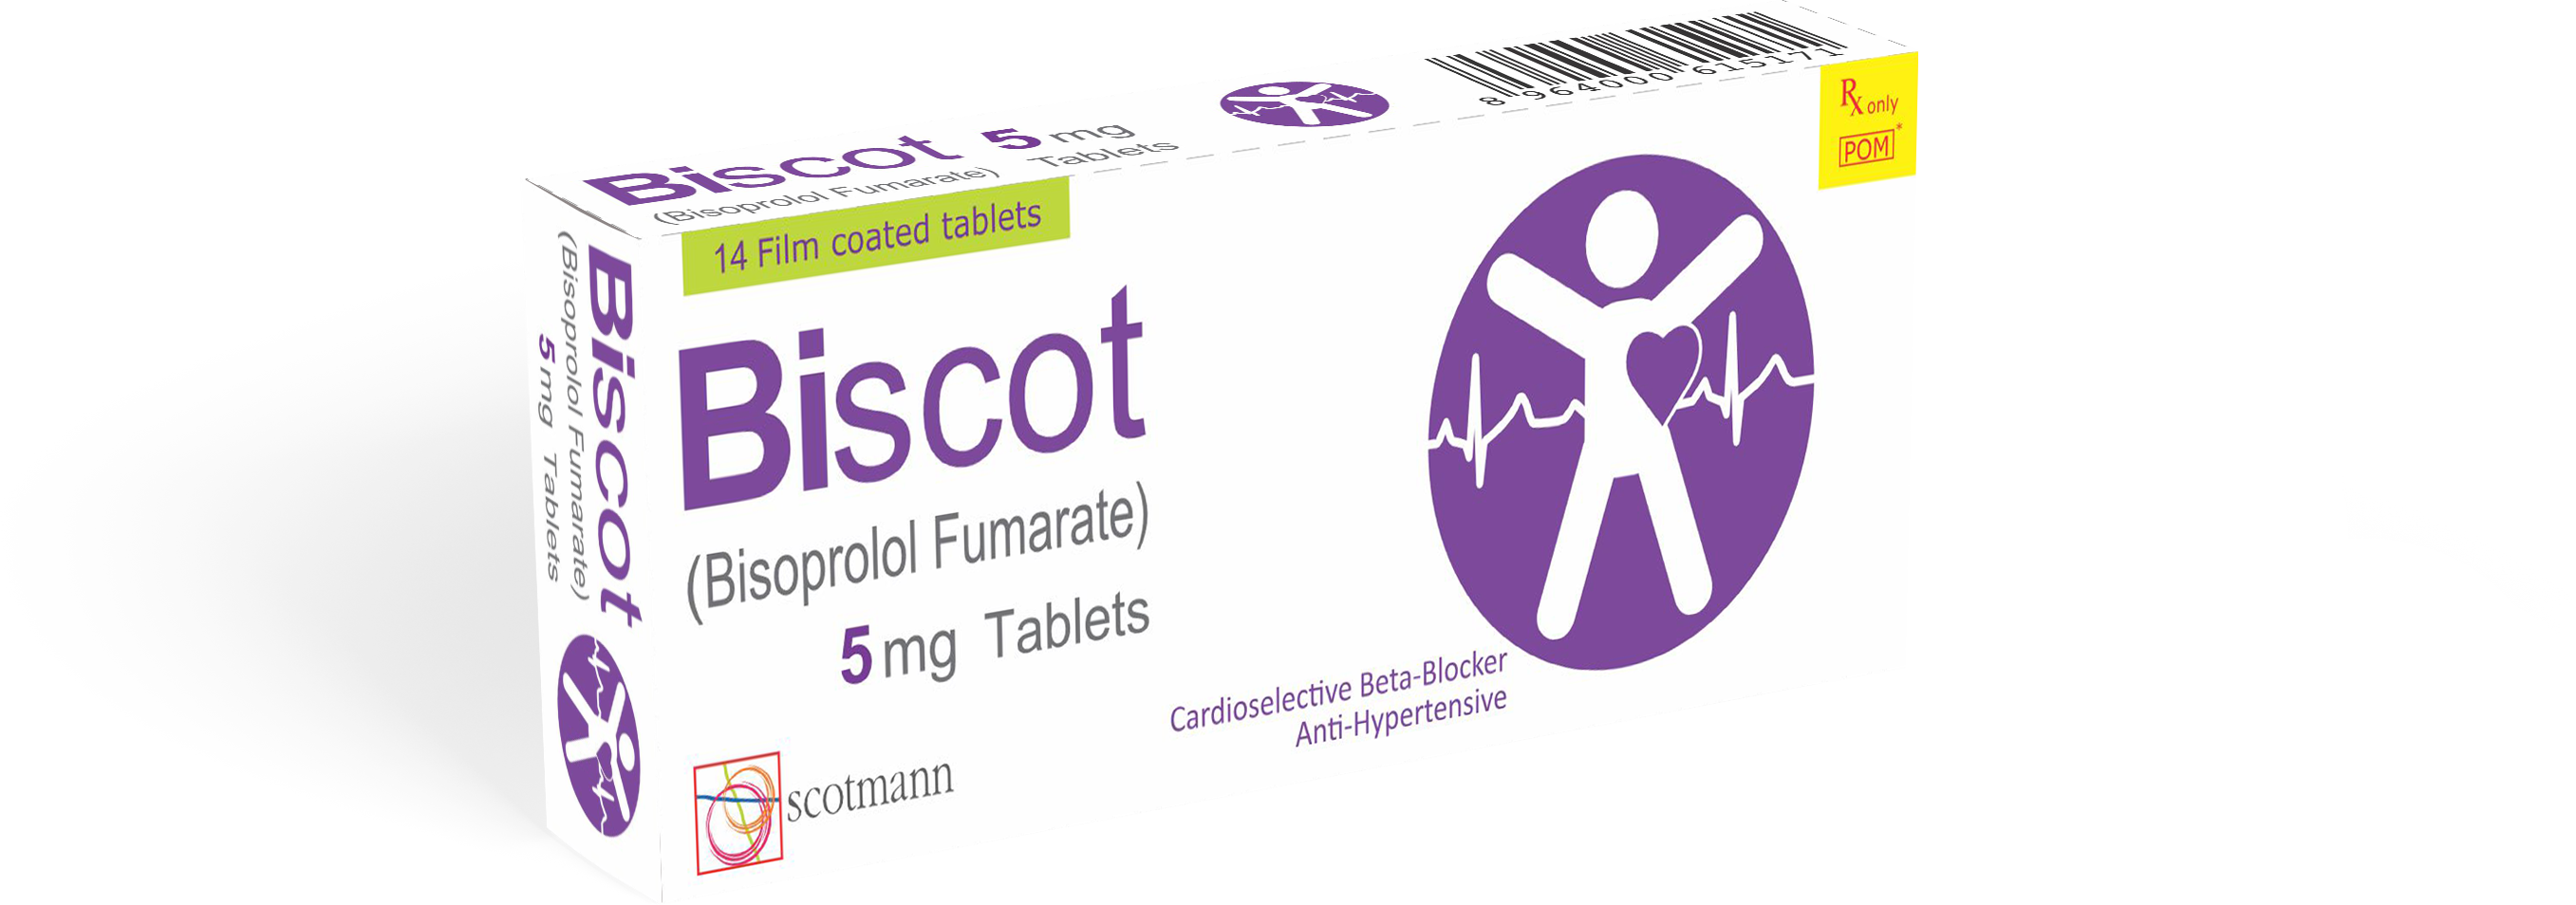 Biscot | Bisoprolol Fumarate | Cardiovascular | Scotmann